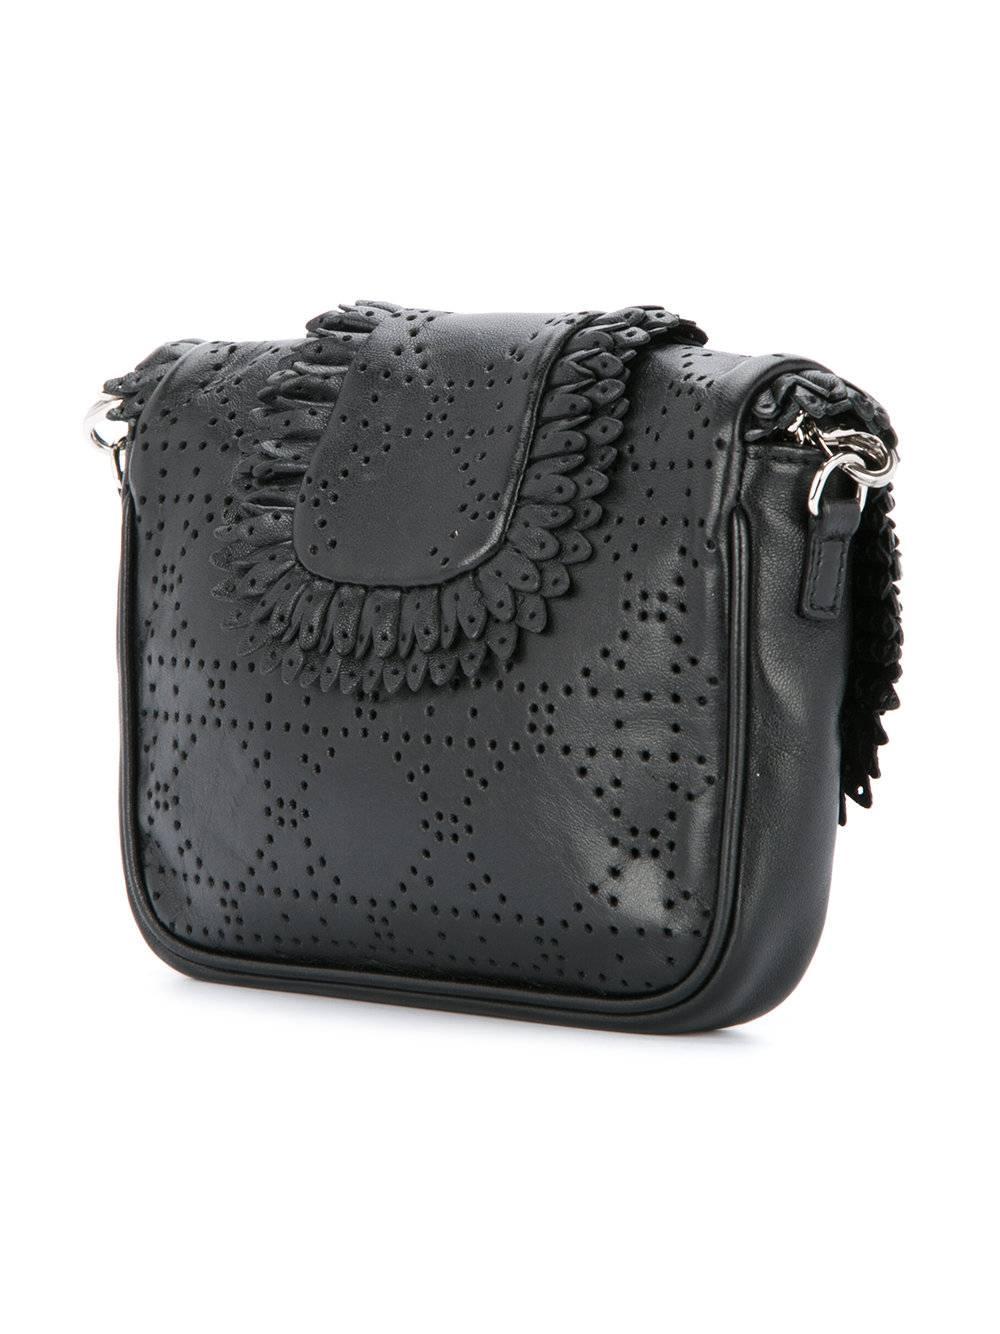 Christian Dior Black Leather Silver Chain Evening Crossbody Shoulder Flap Bag 1